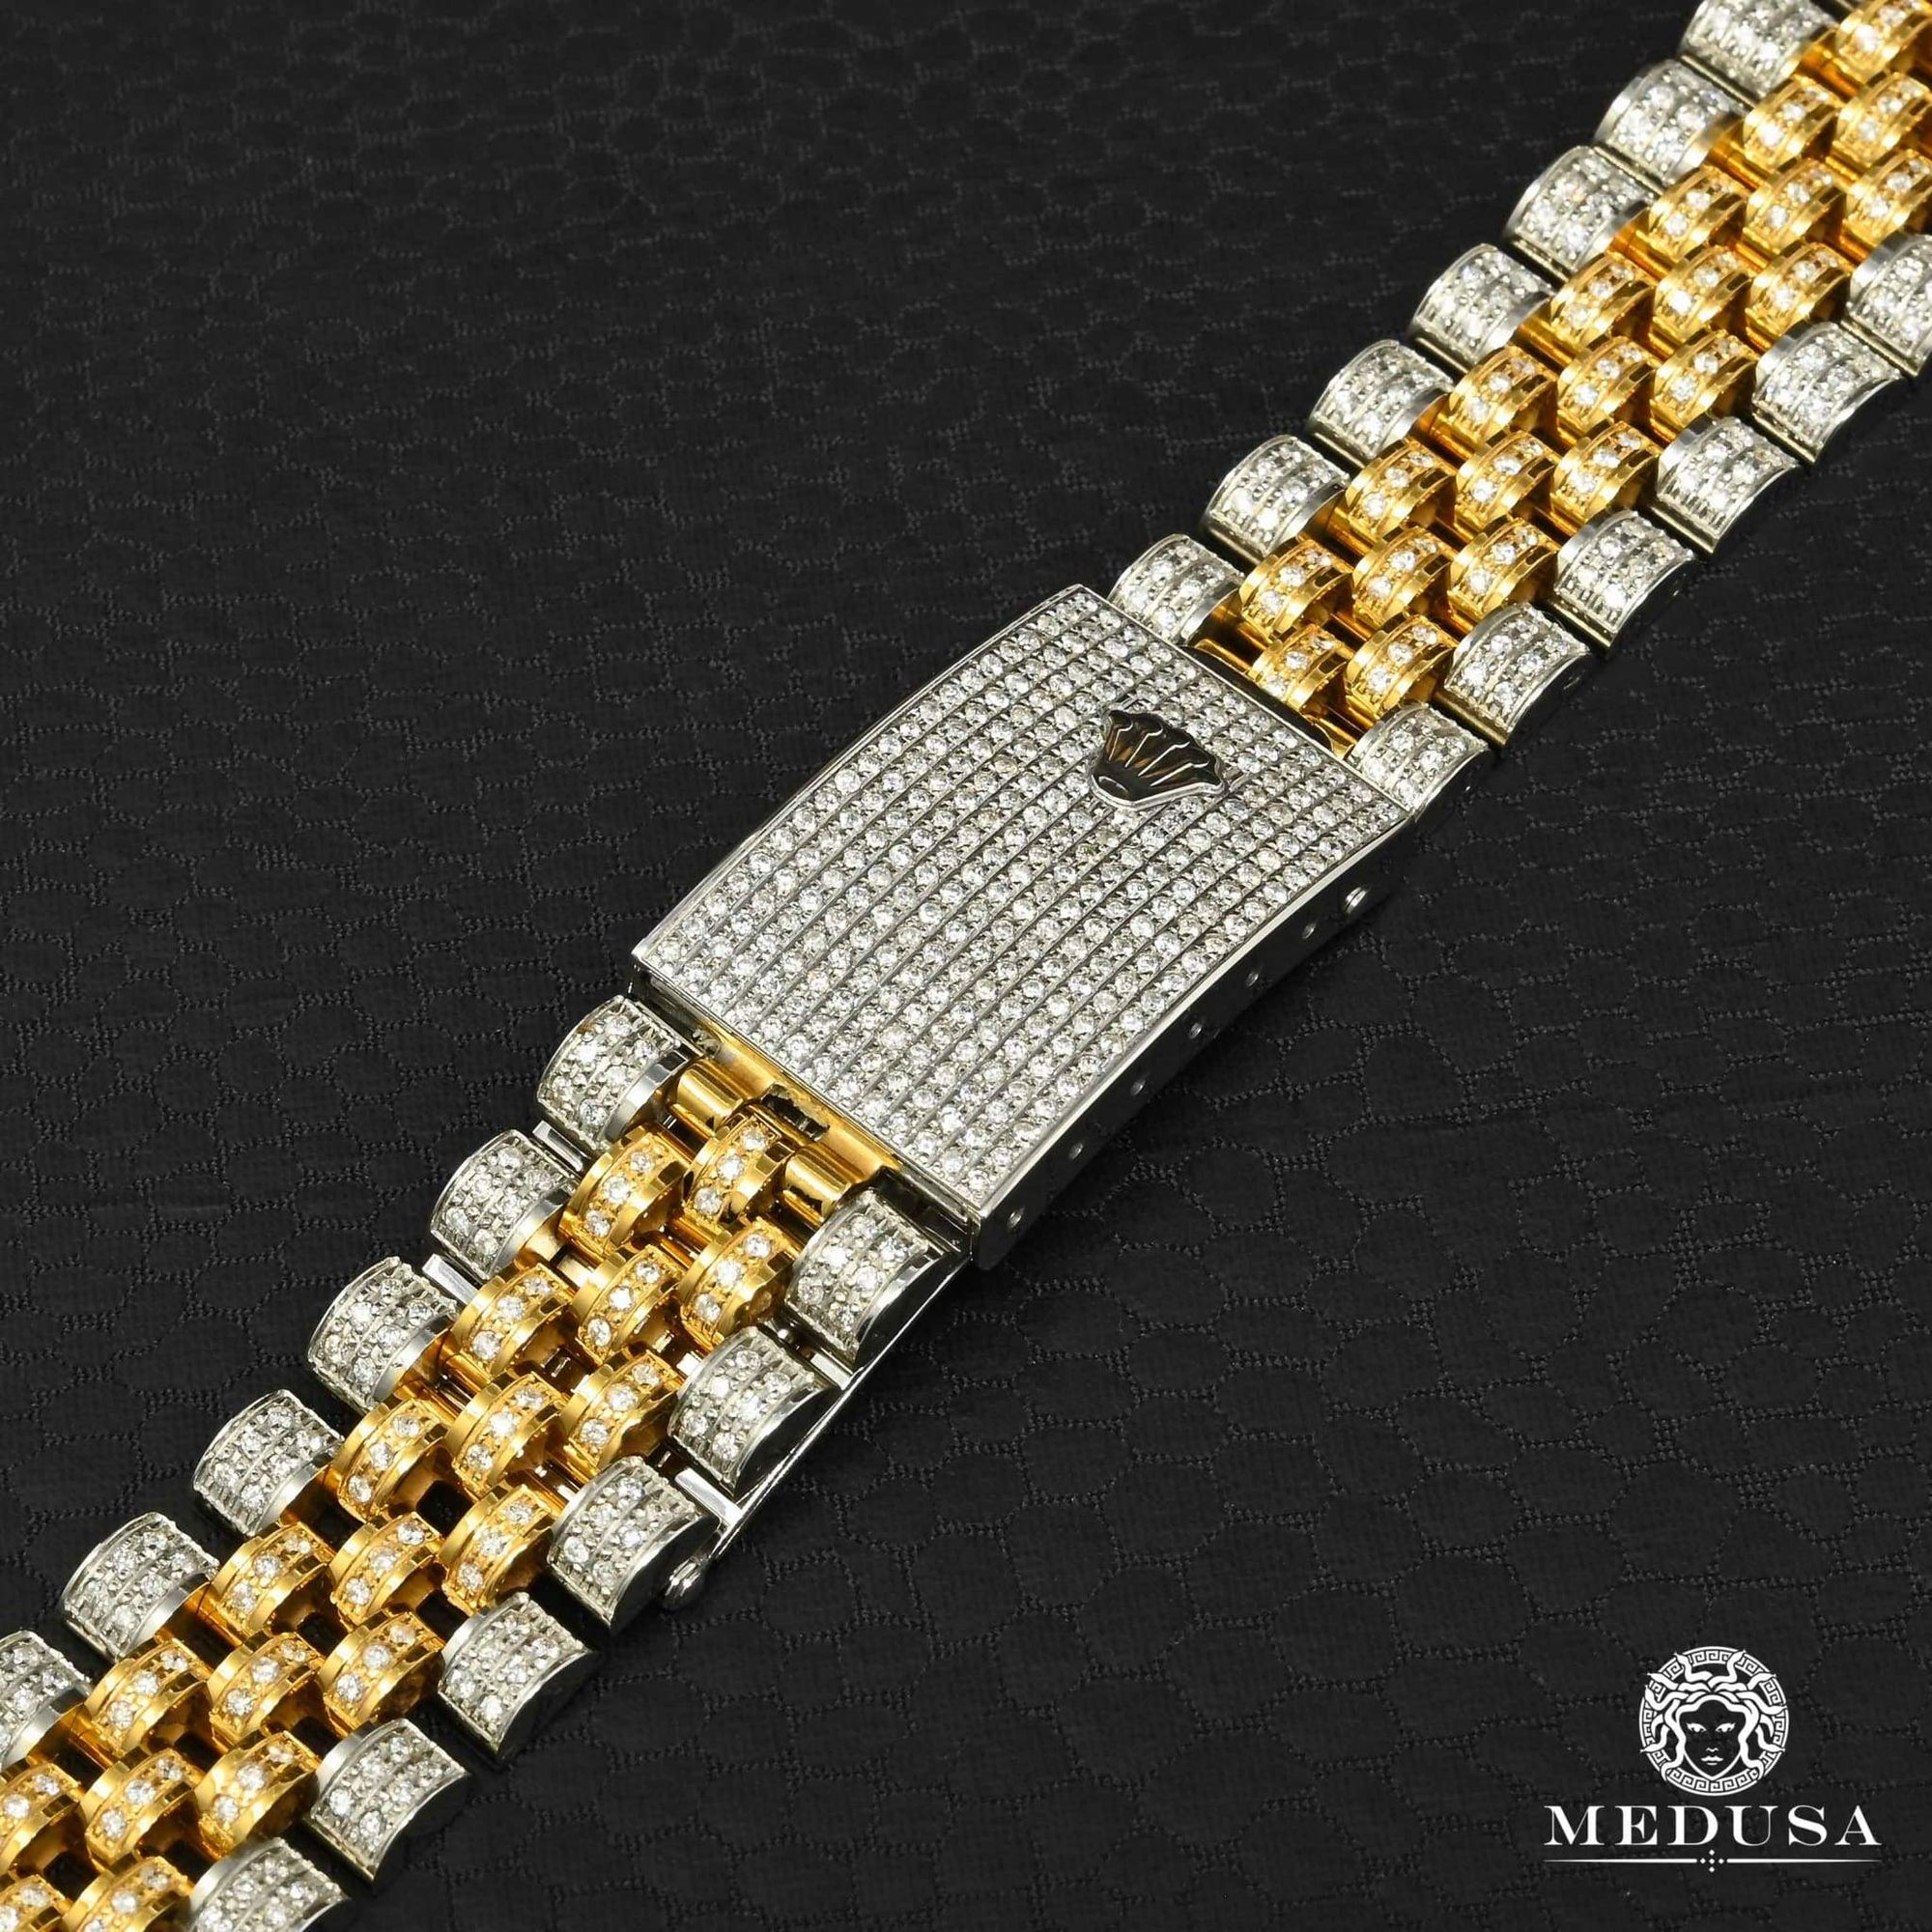 Rolex watch | Rolex Men's Watch Jubilee Bracelet - Iced Out 2 Tones Gold 2 Tones